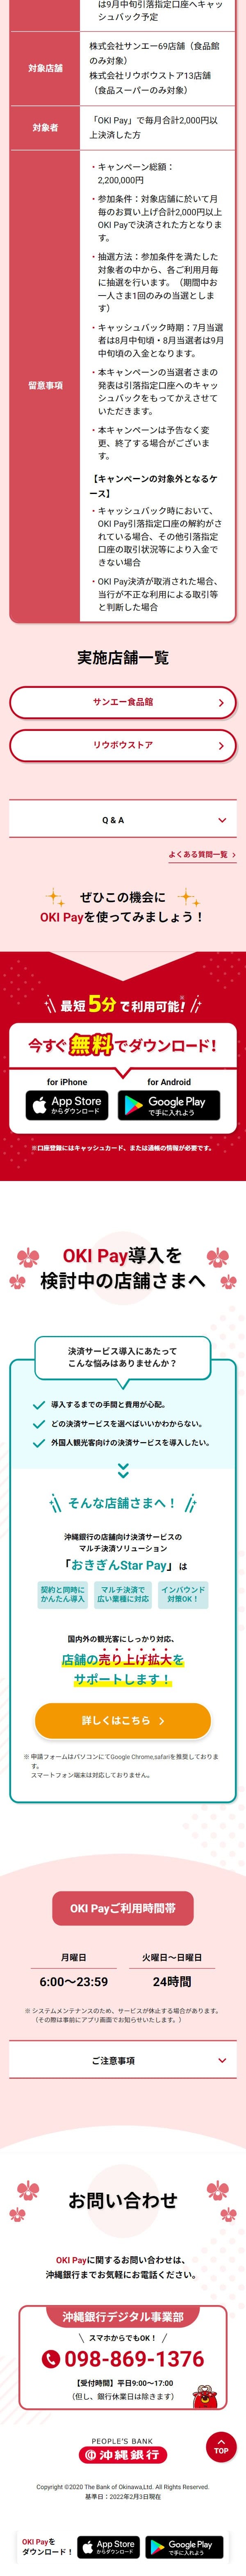 OKI Pay_sp_2